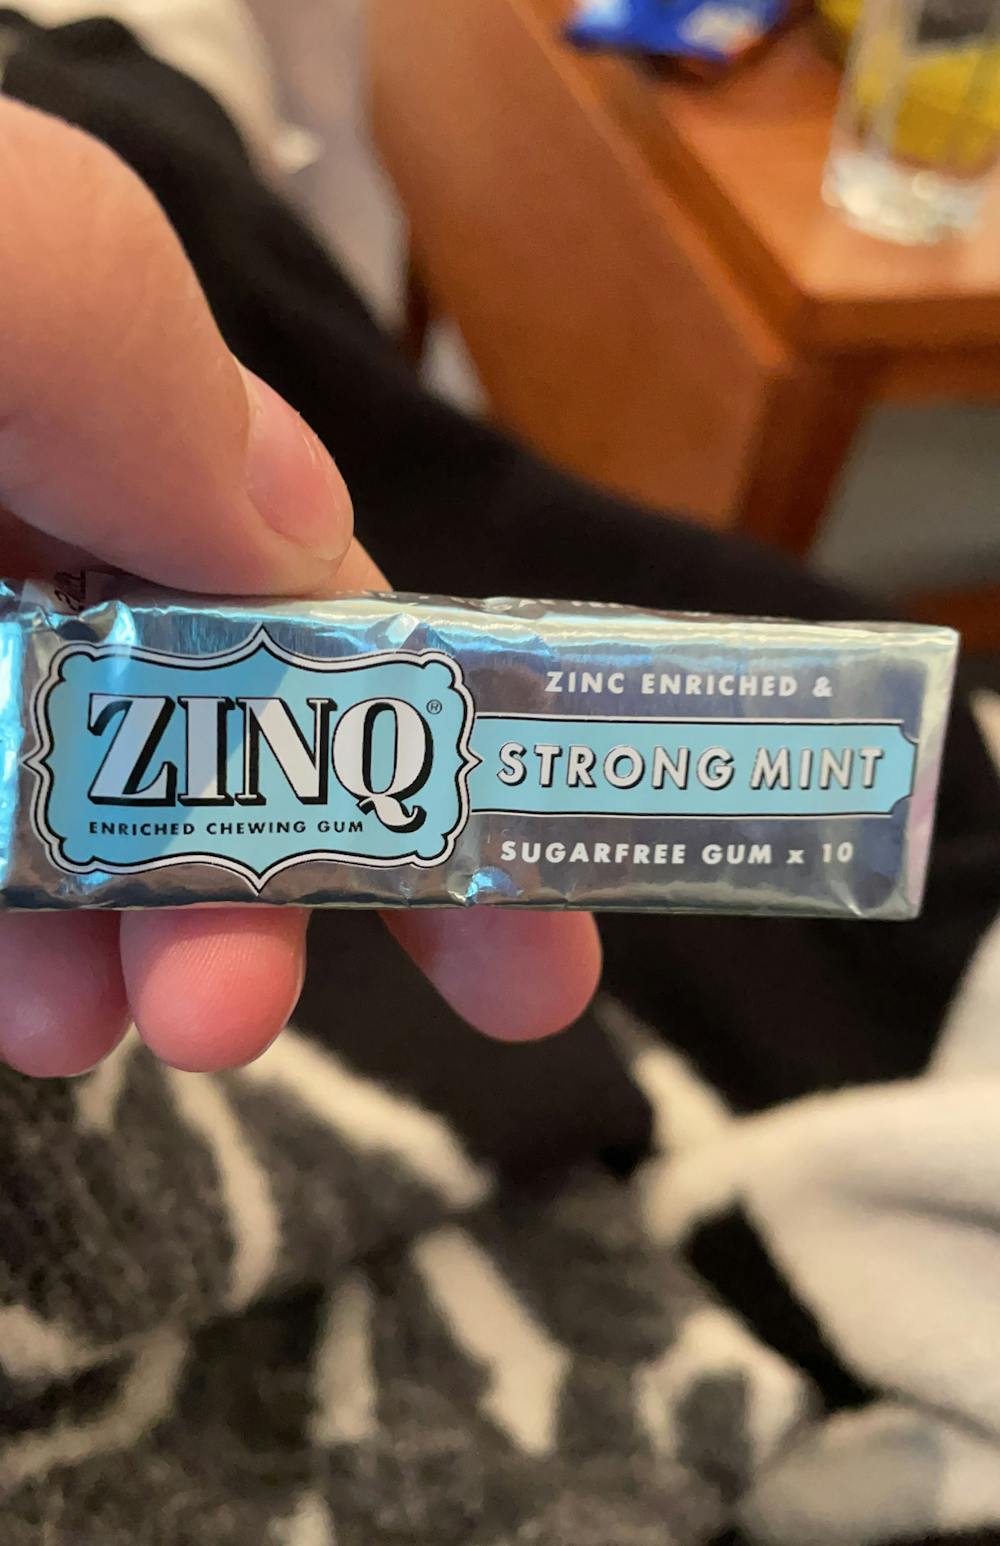 Strong mint, Zinq